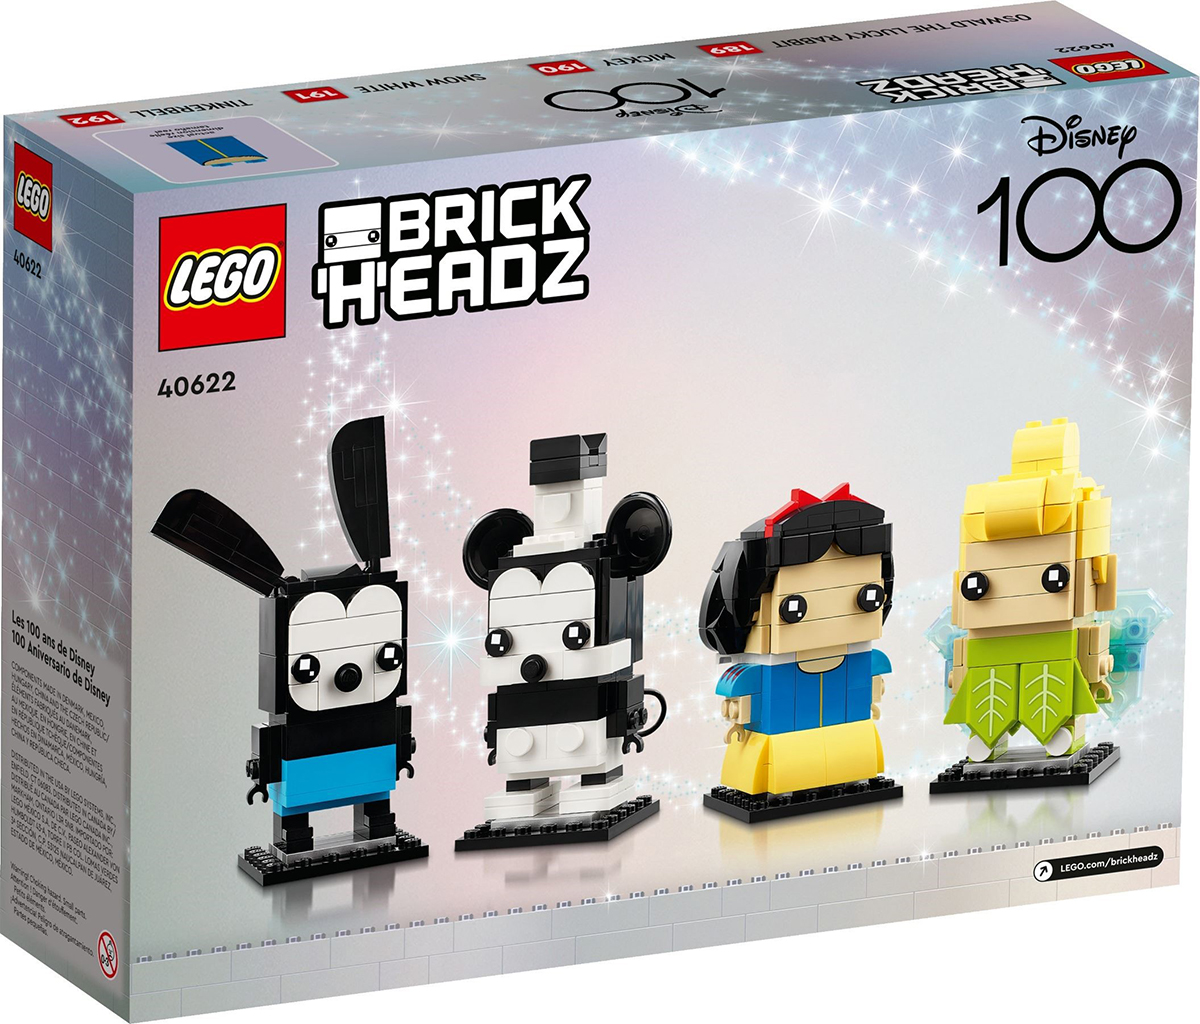 LEGO BrickHeadz Sale to Up to 40% Now Up at LEGO.com